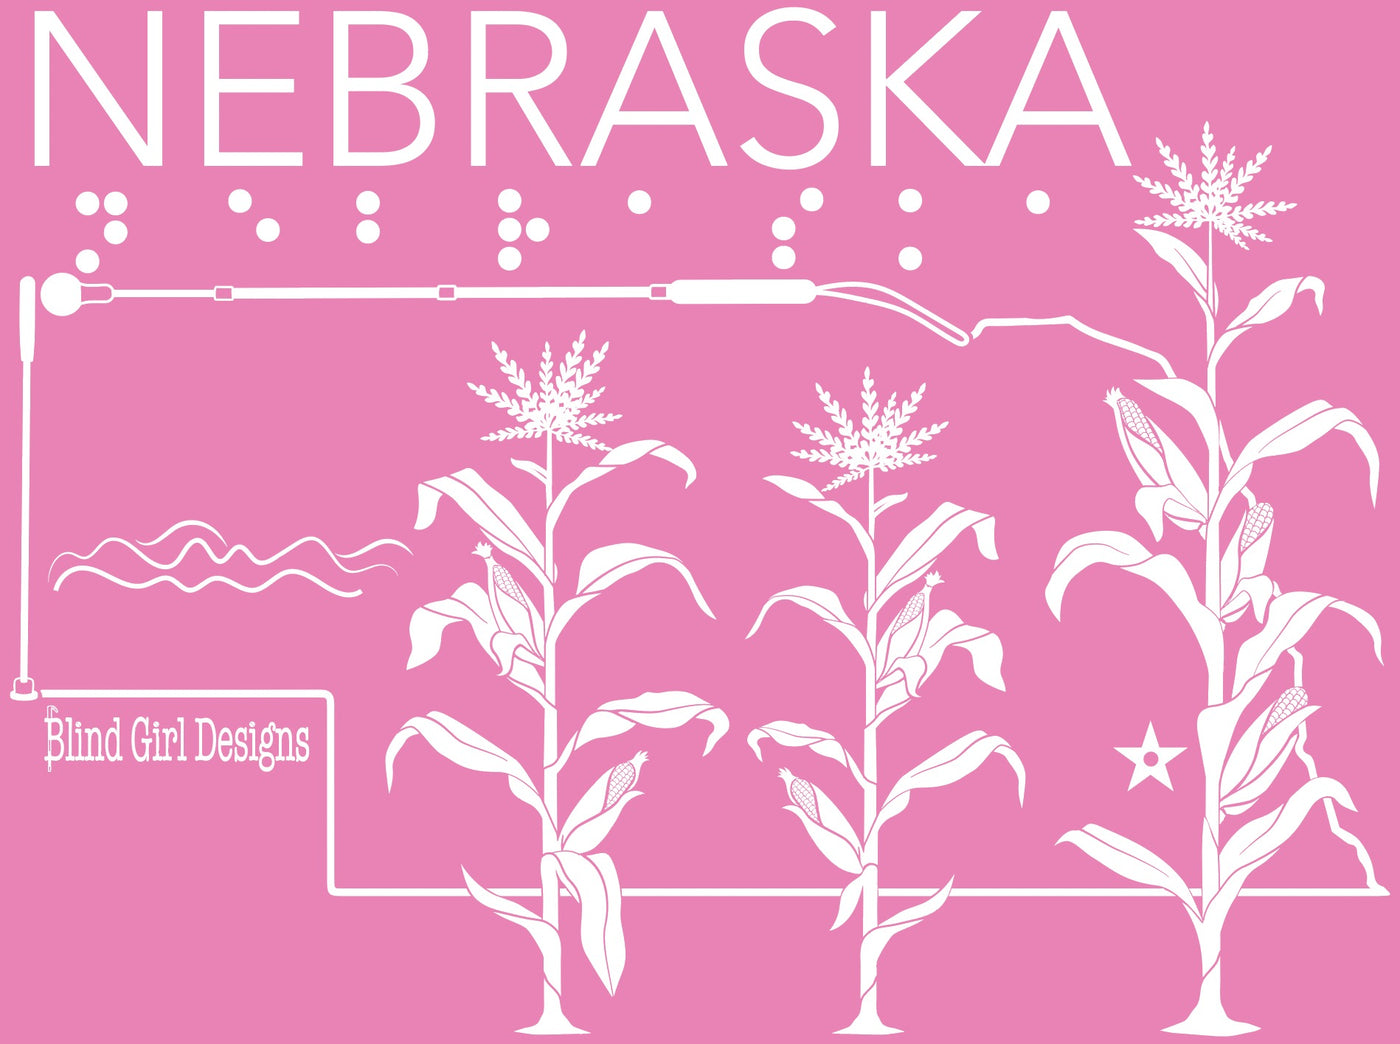 New! 3D Tactile Nebraska T-Shirt - Pink